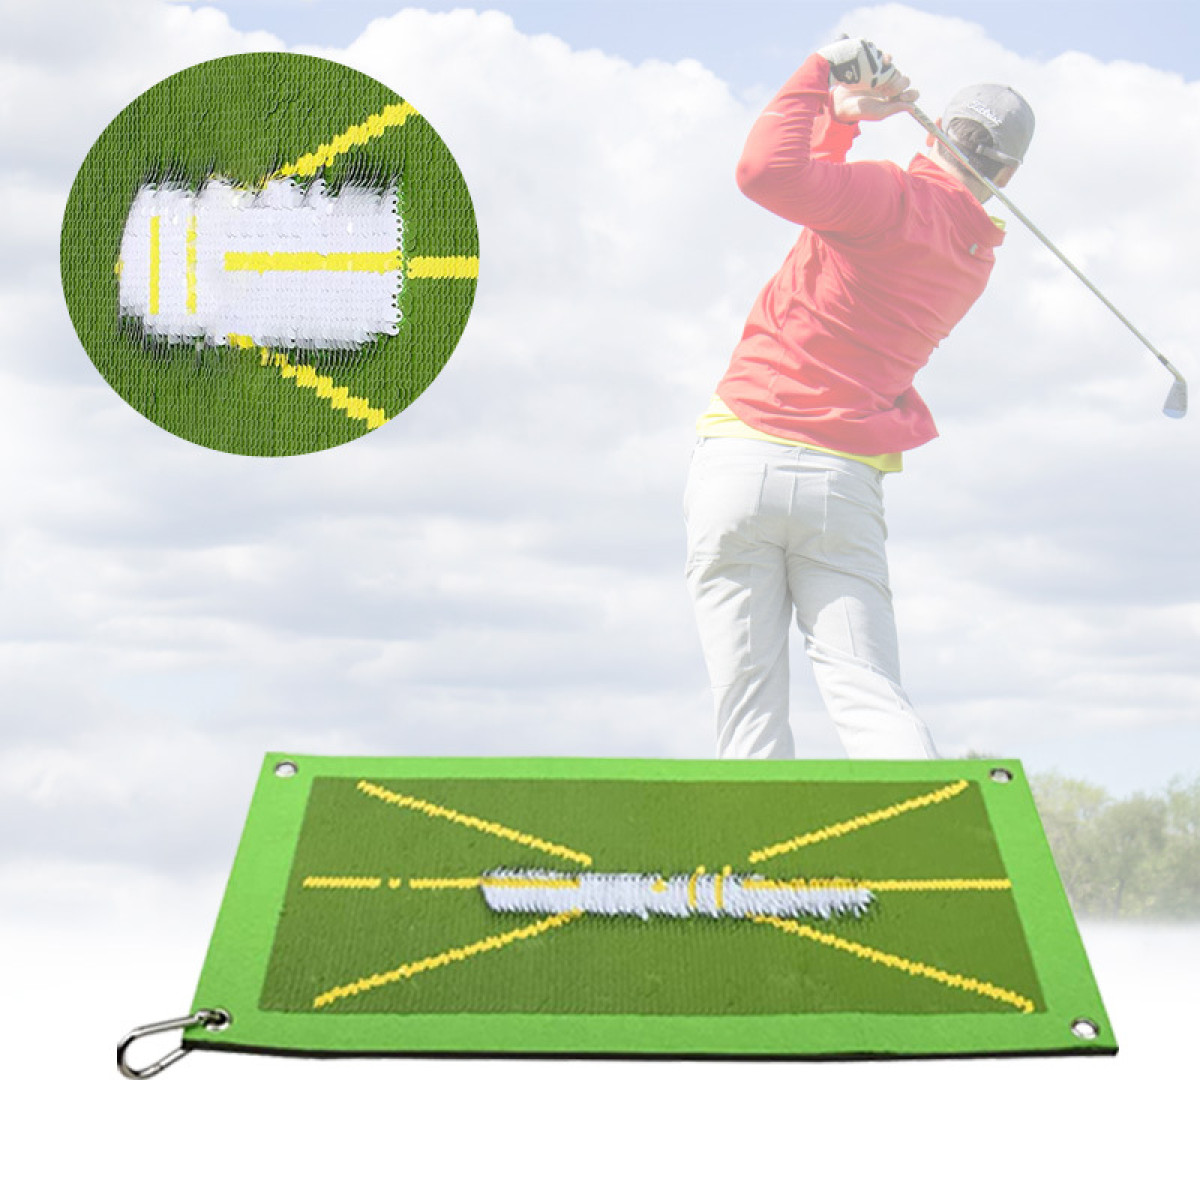 Golf-Trainingsmatte, Schwungerkennung Golfschwungmatte INF grün 25x50 cm Golf-Trainingsmatte, zur